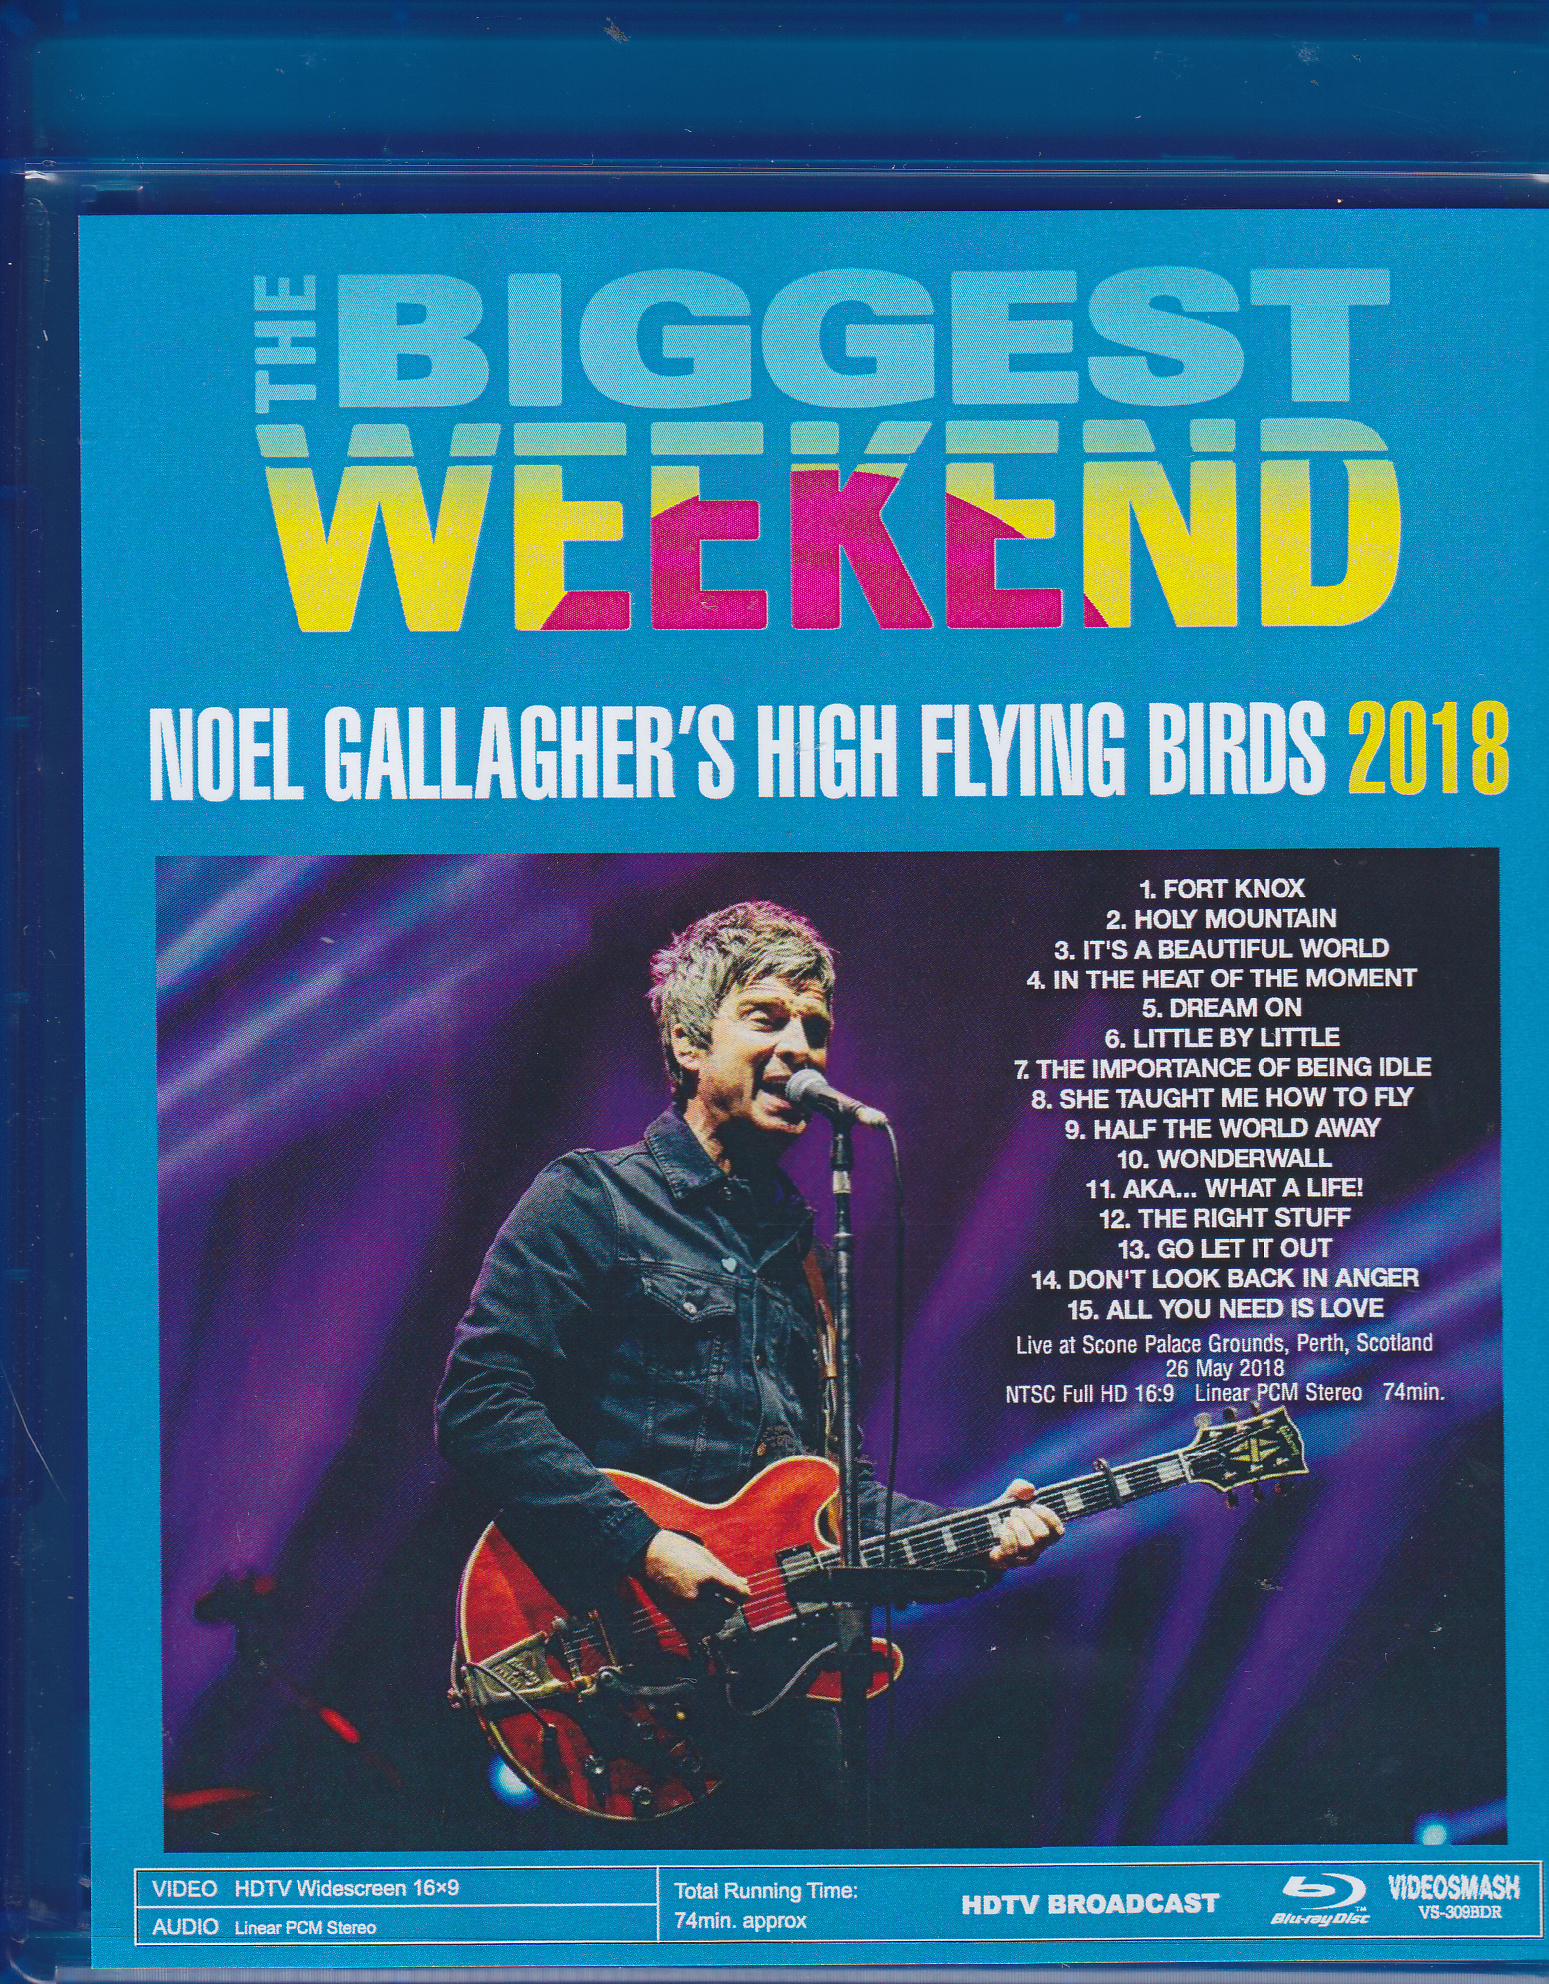 Noel Gallaghers High Flying Birds / The Biggest Weekend 2018